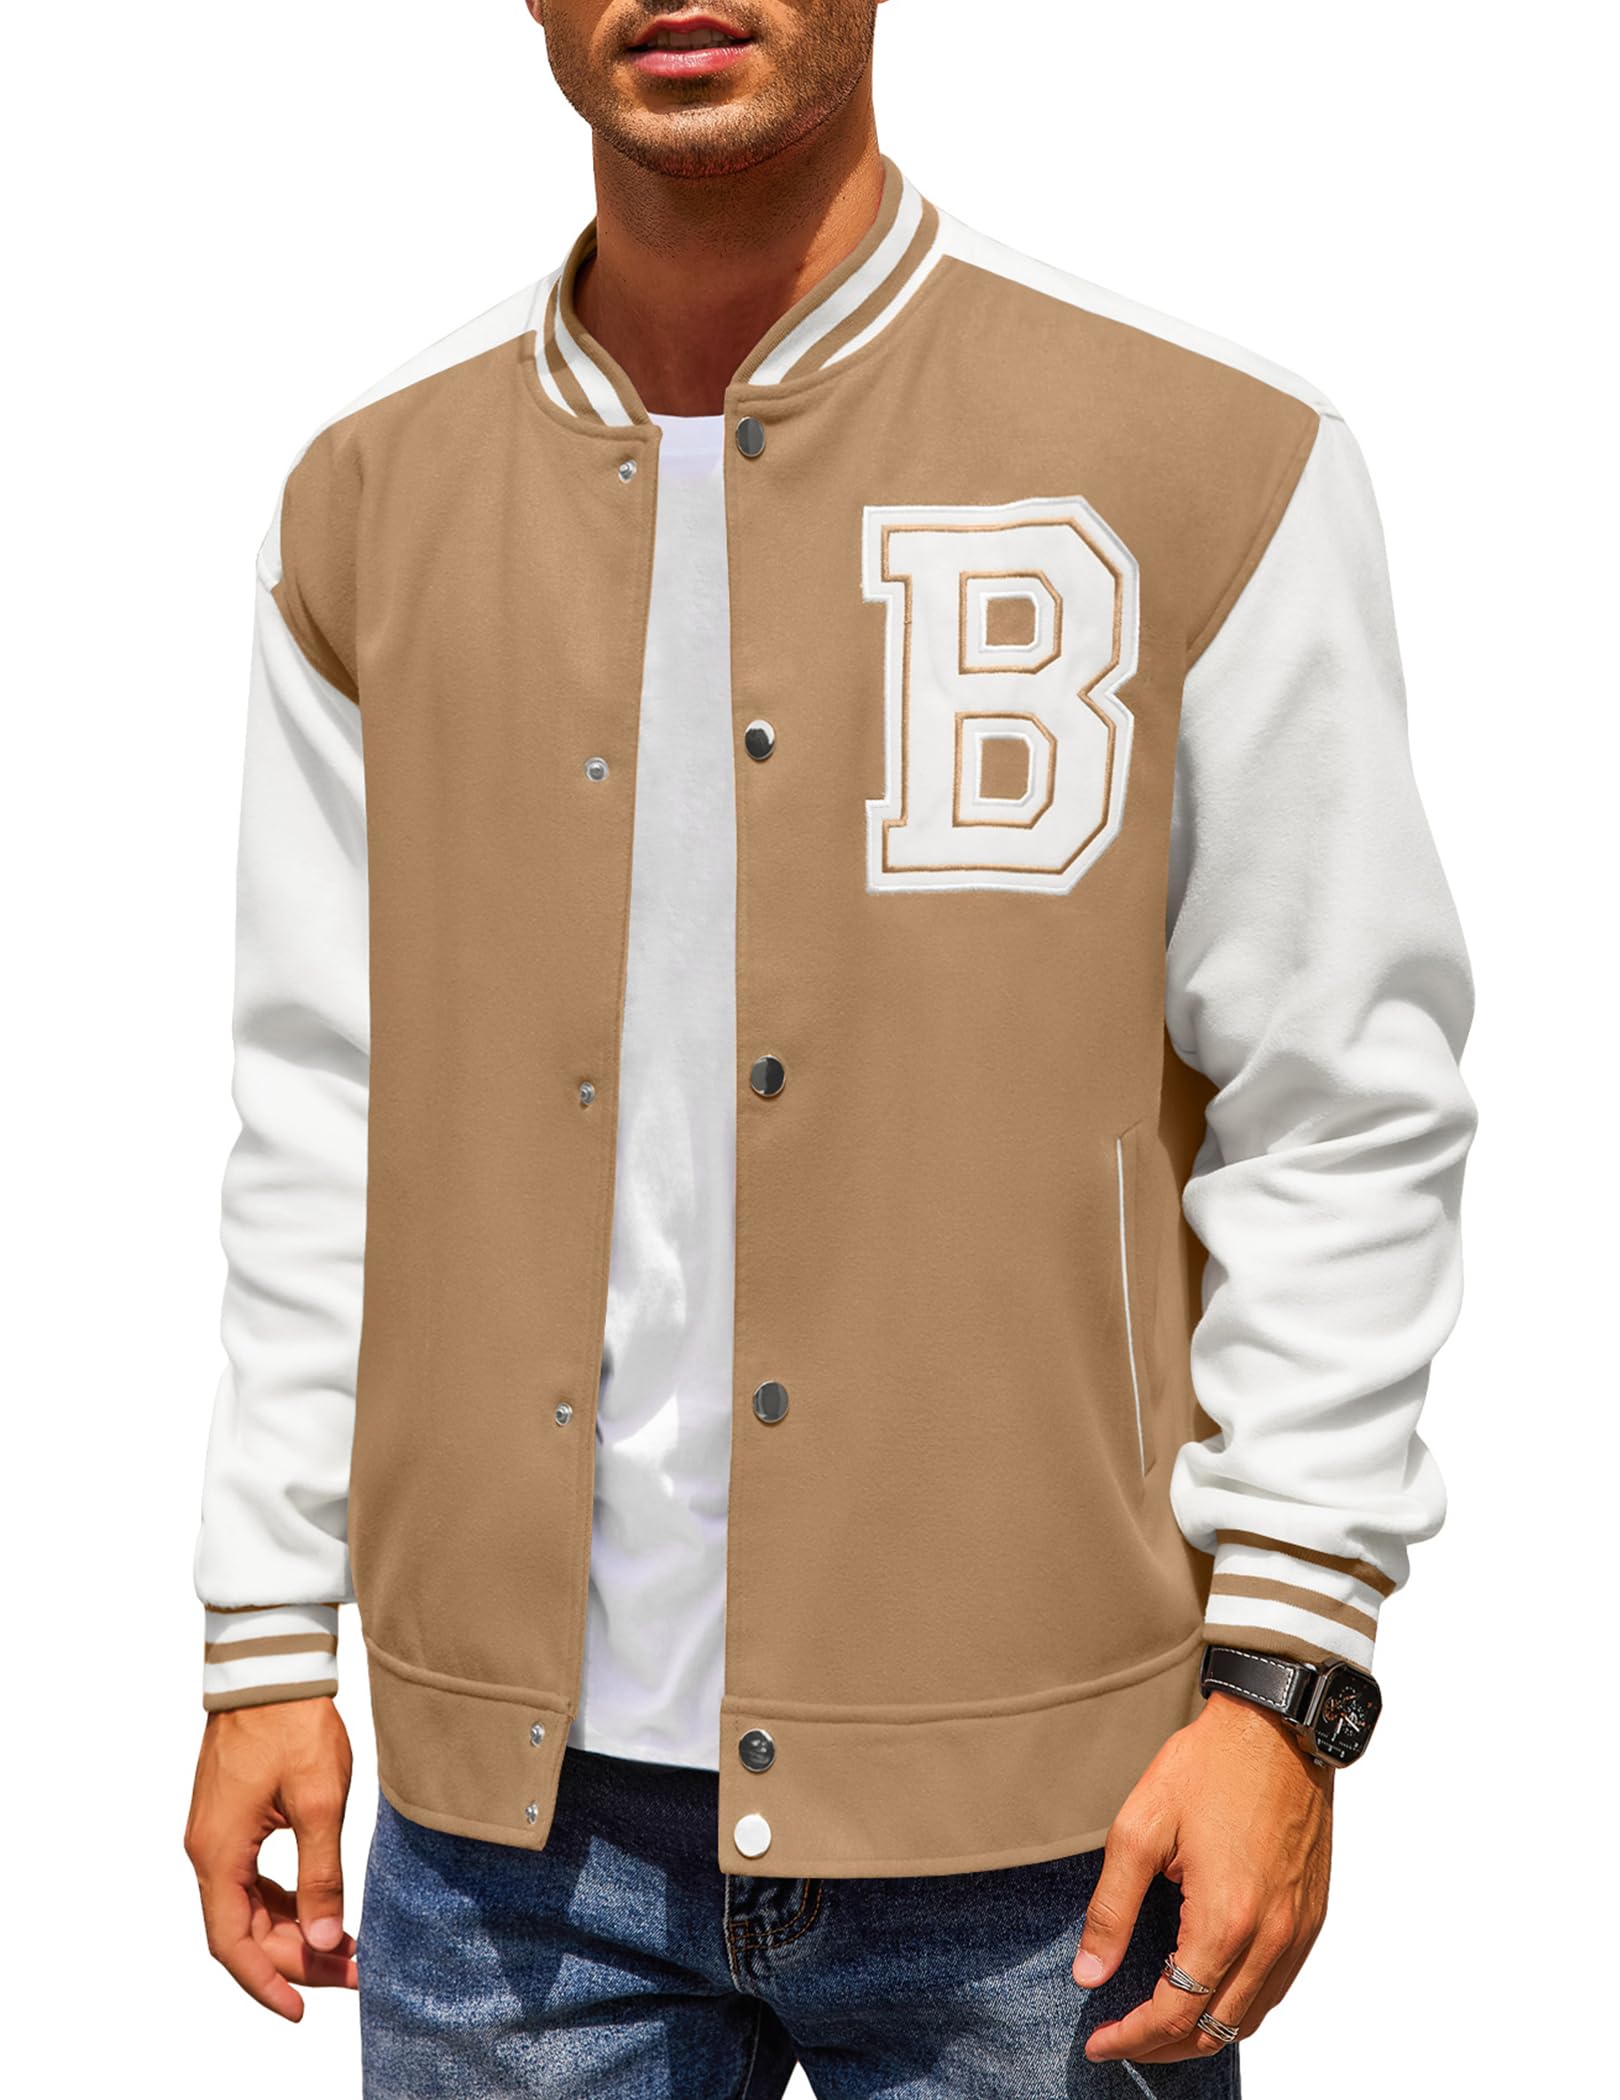 COOFANDY Baseball Jacket for Mens Letterman Varsity Jackets Button Up Khaki Sweatshirt with Letter B